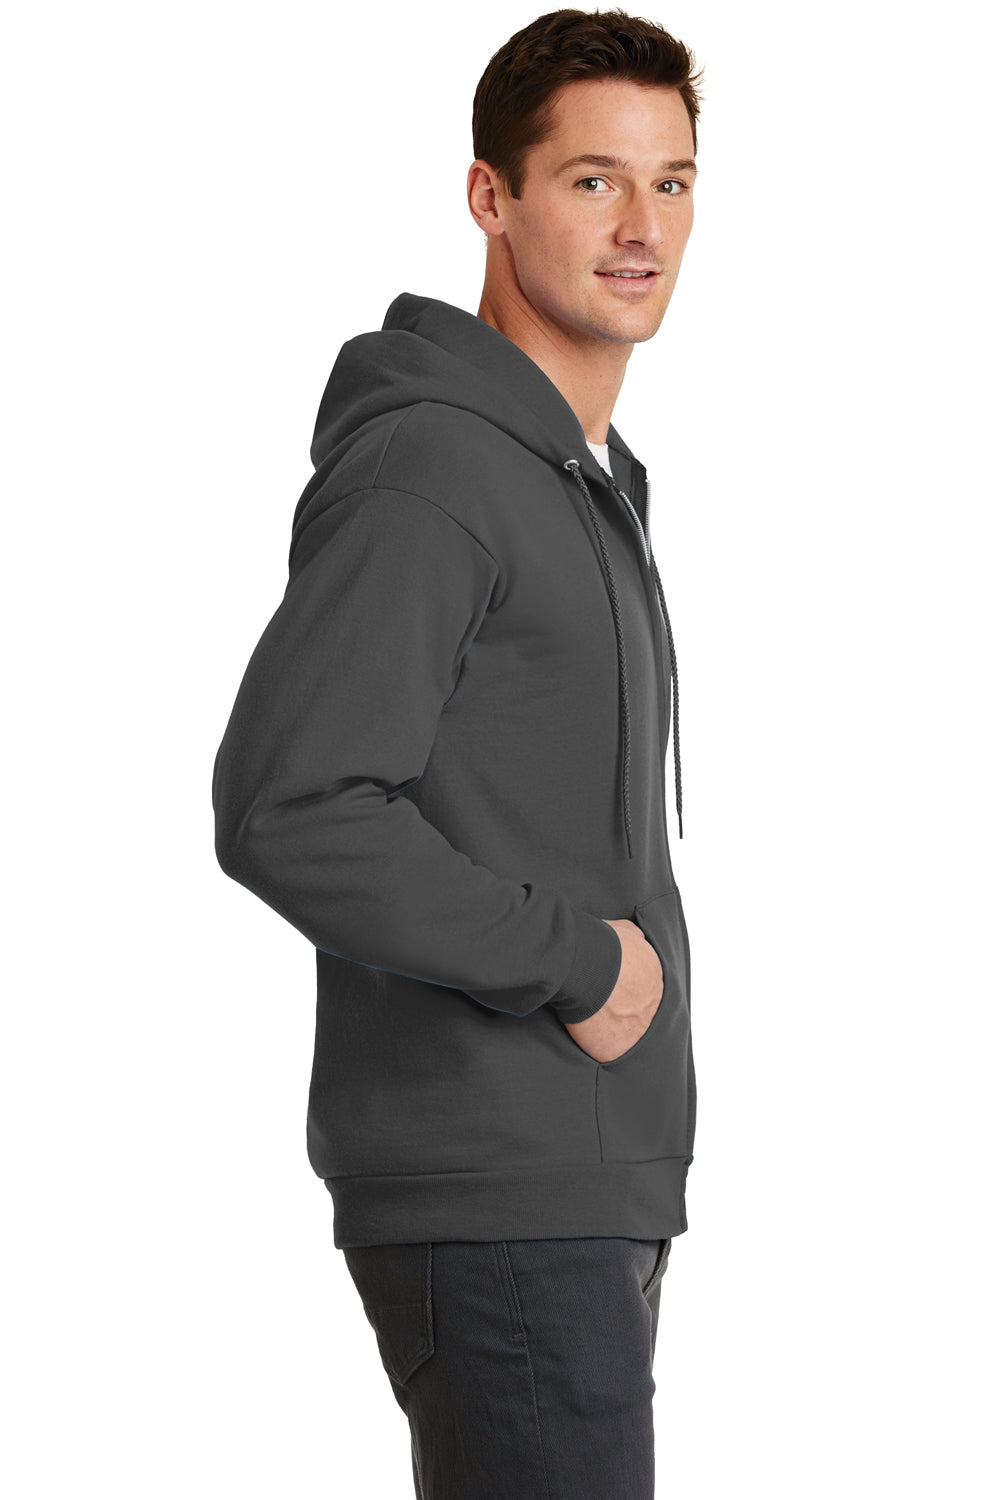 Port & Company PC78ZH Mens Core Fleece Full Zip Hooded Sweatshirt Hoodie Charcoal Grey Side